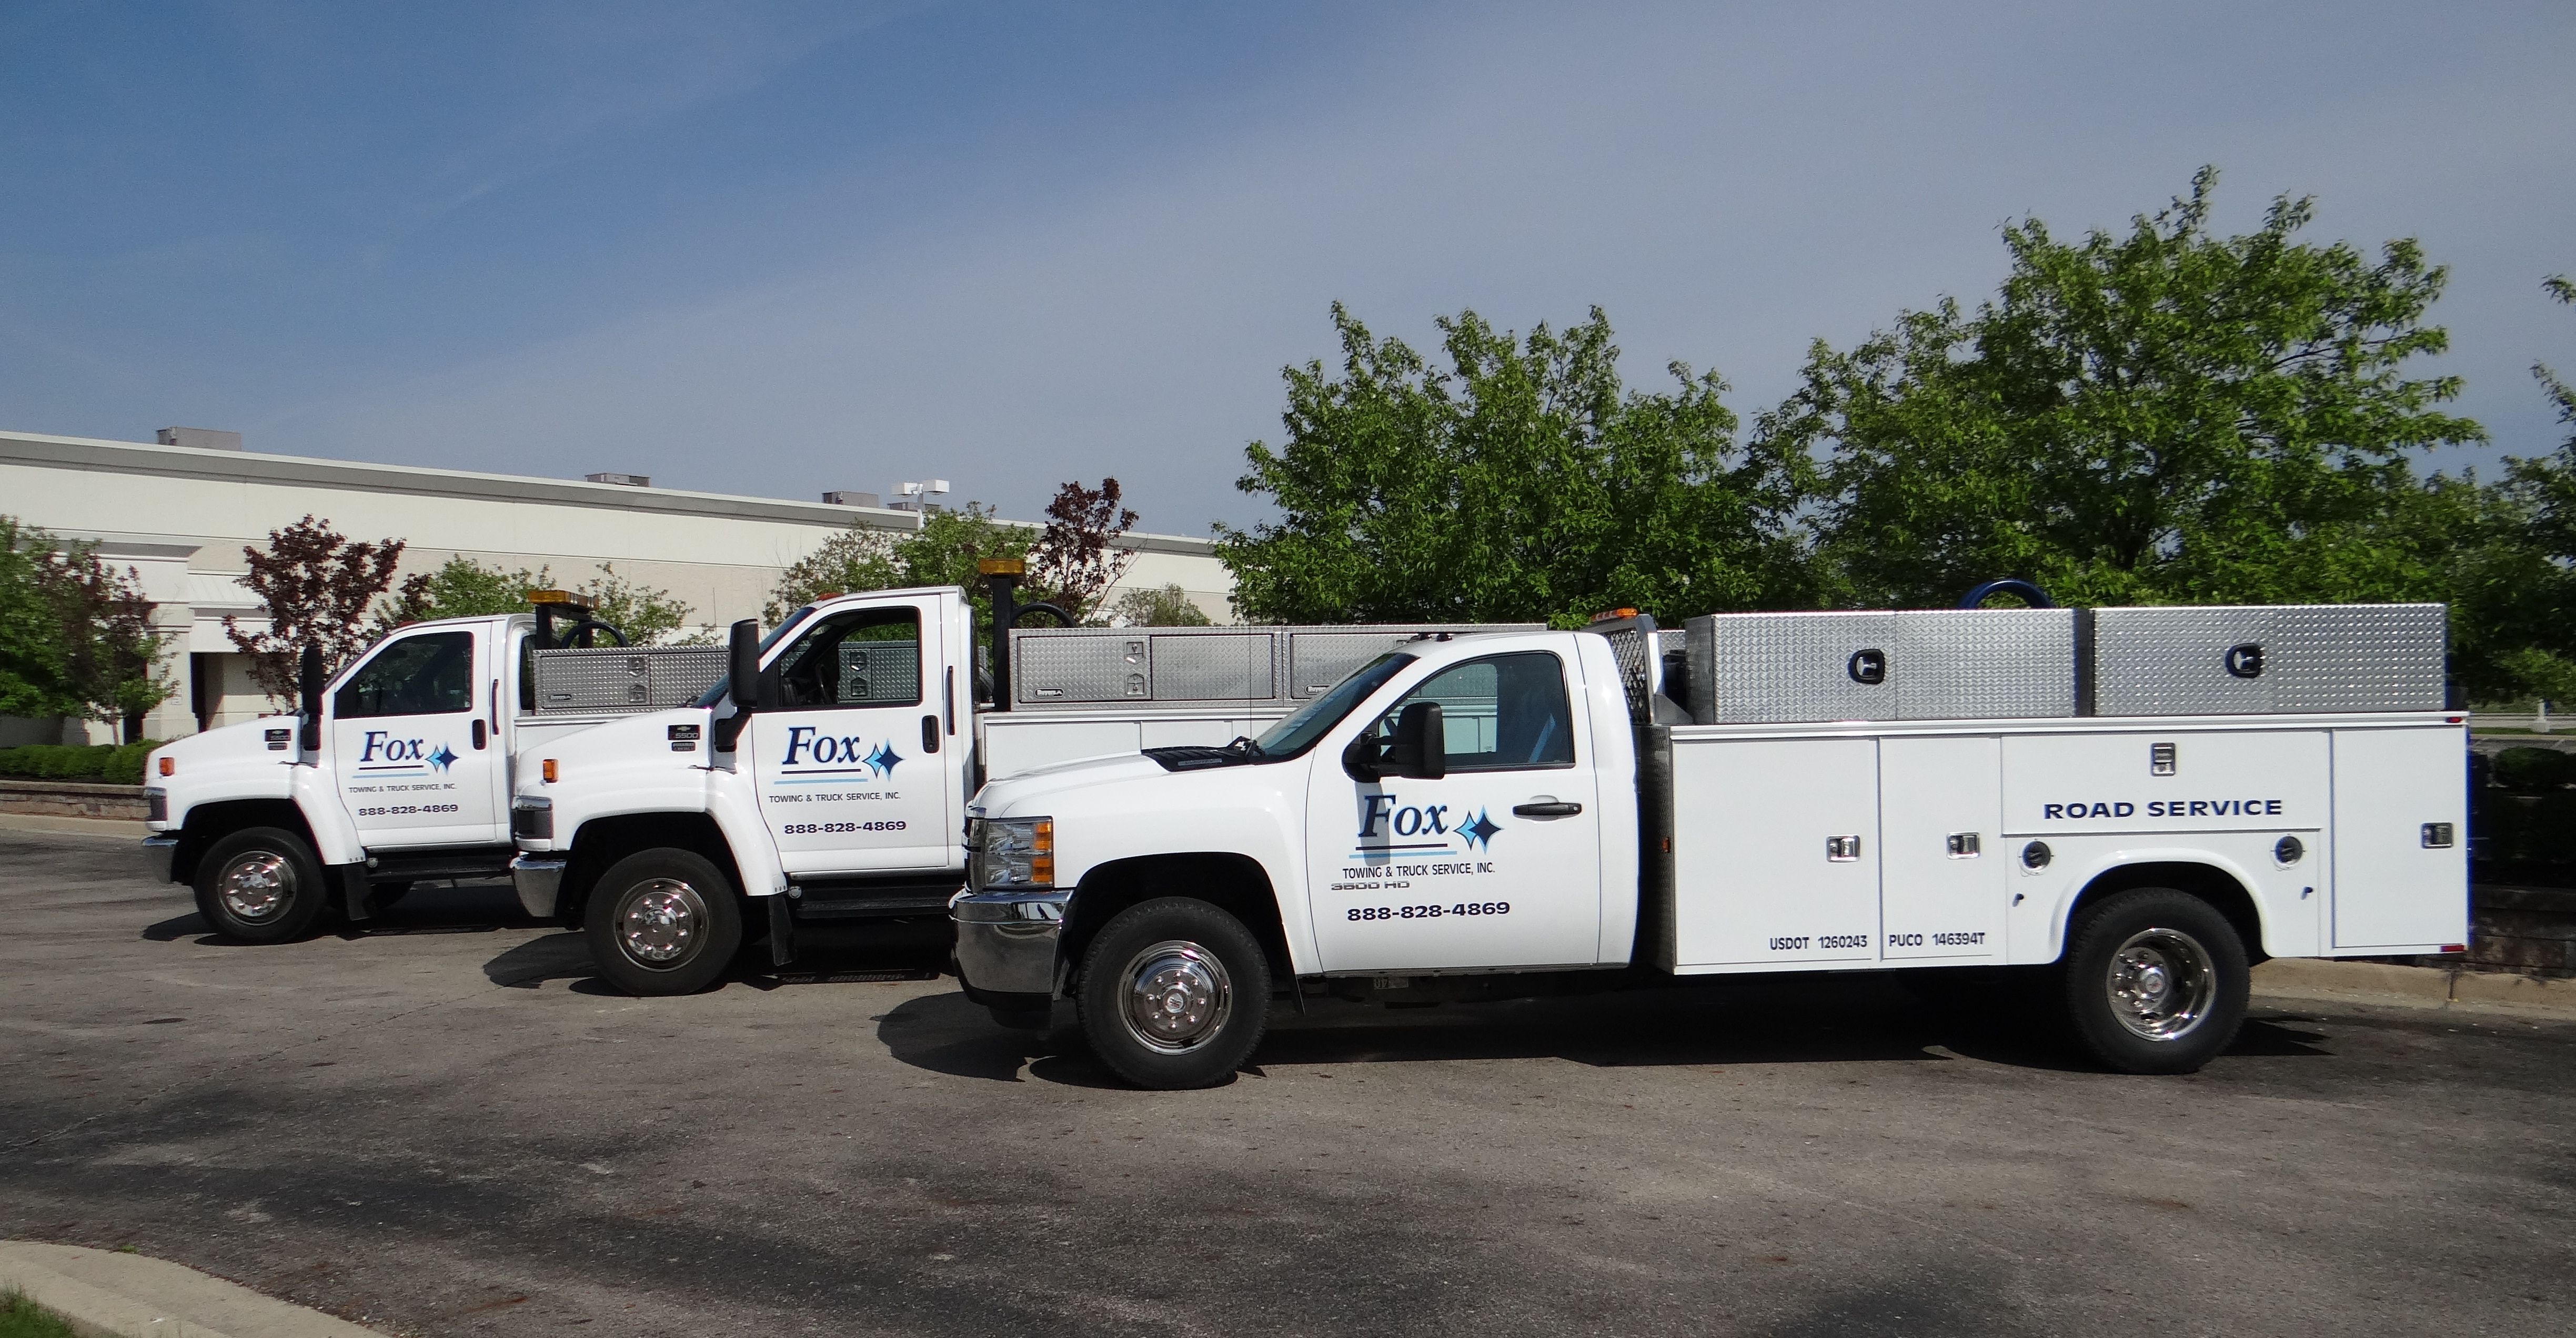 trailer repair shop, Wilmington, OH 45177 Fox Towing & Truck Service Inc. Wilmington (937)382-6544